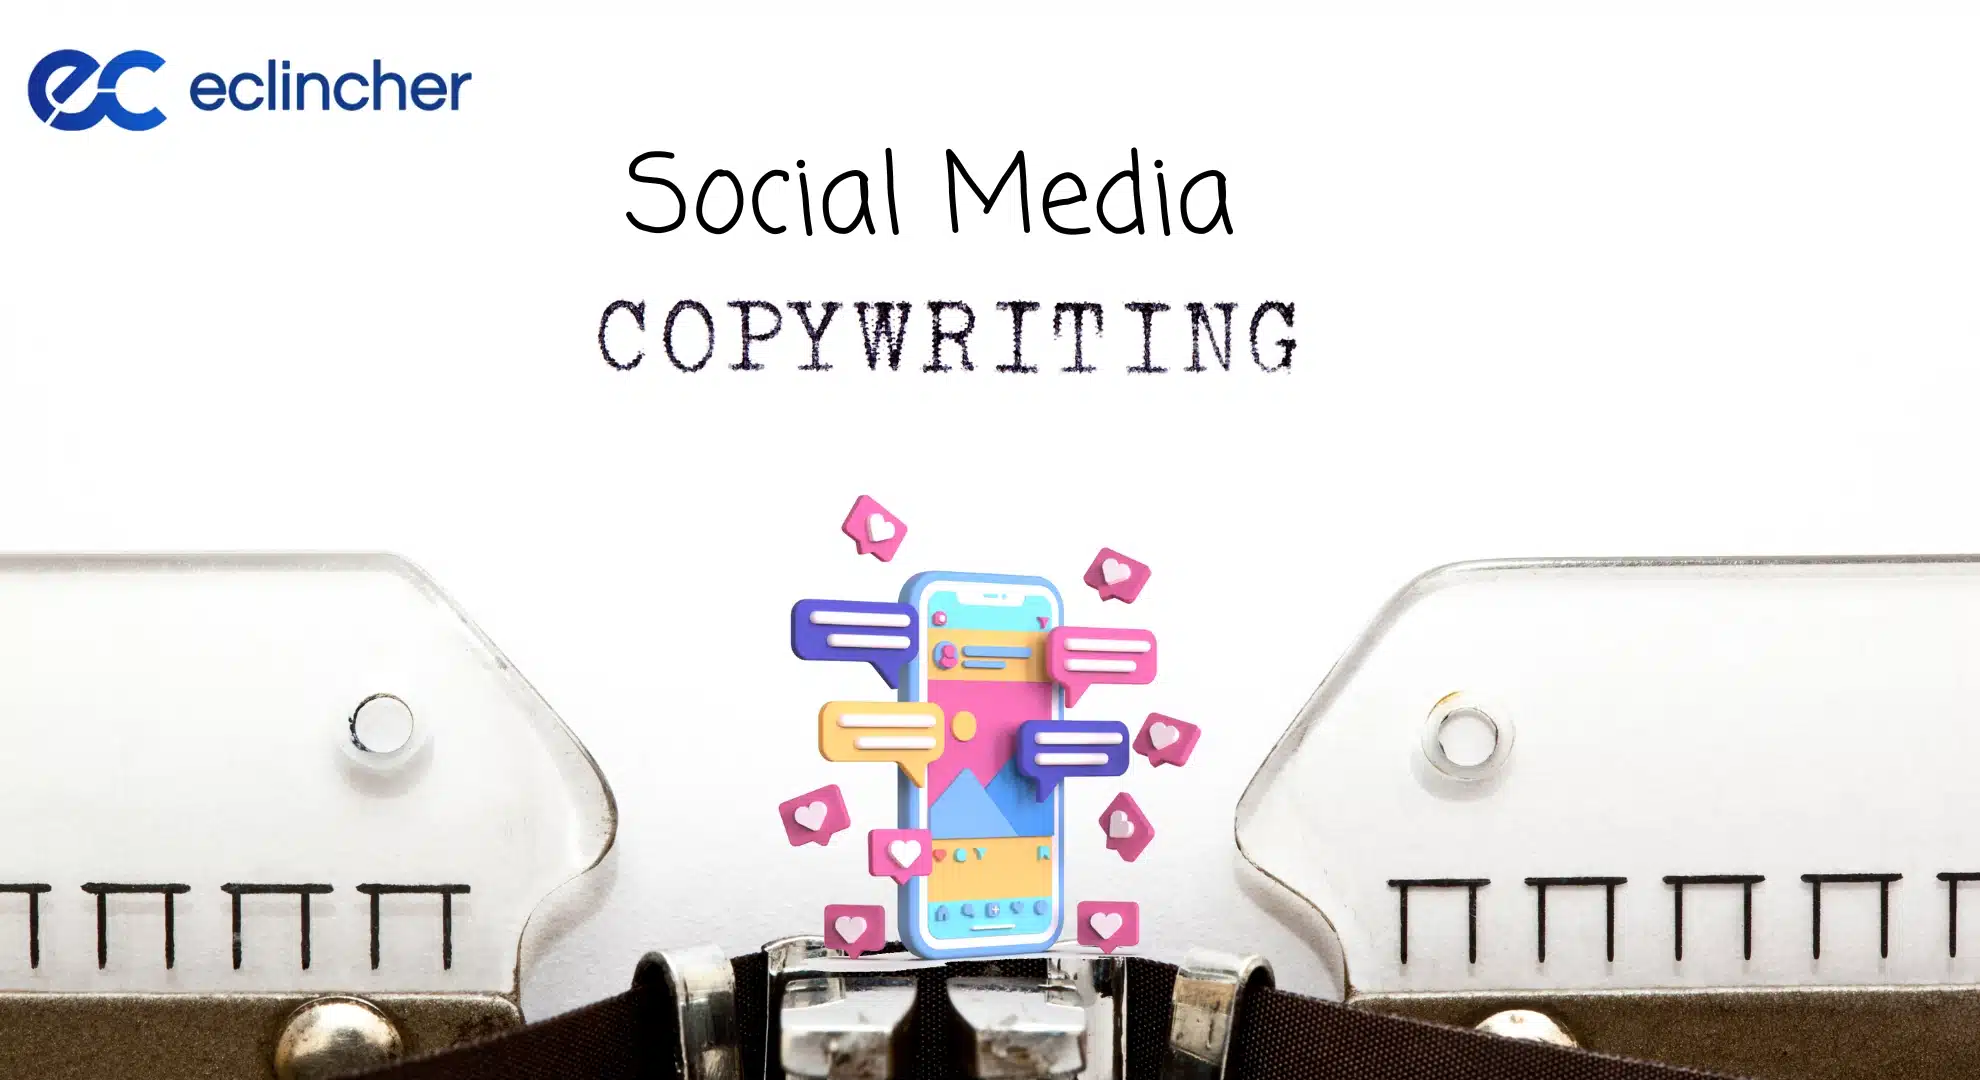 What is Social Media Copywriting